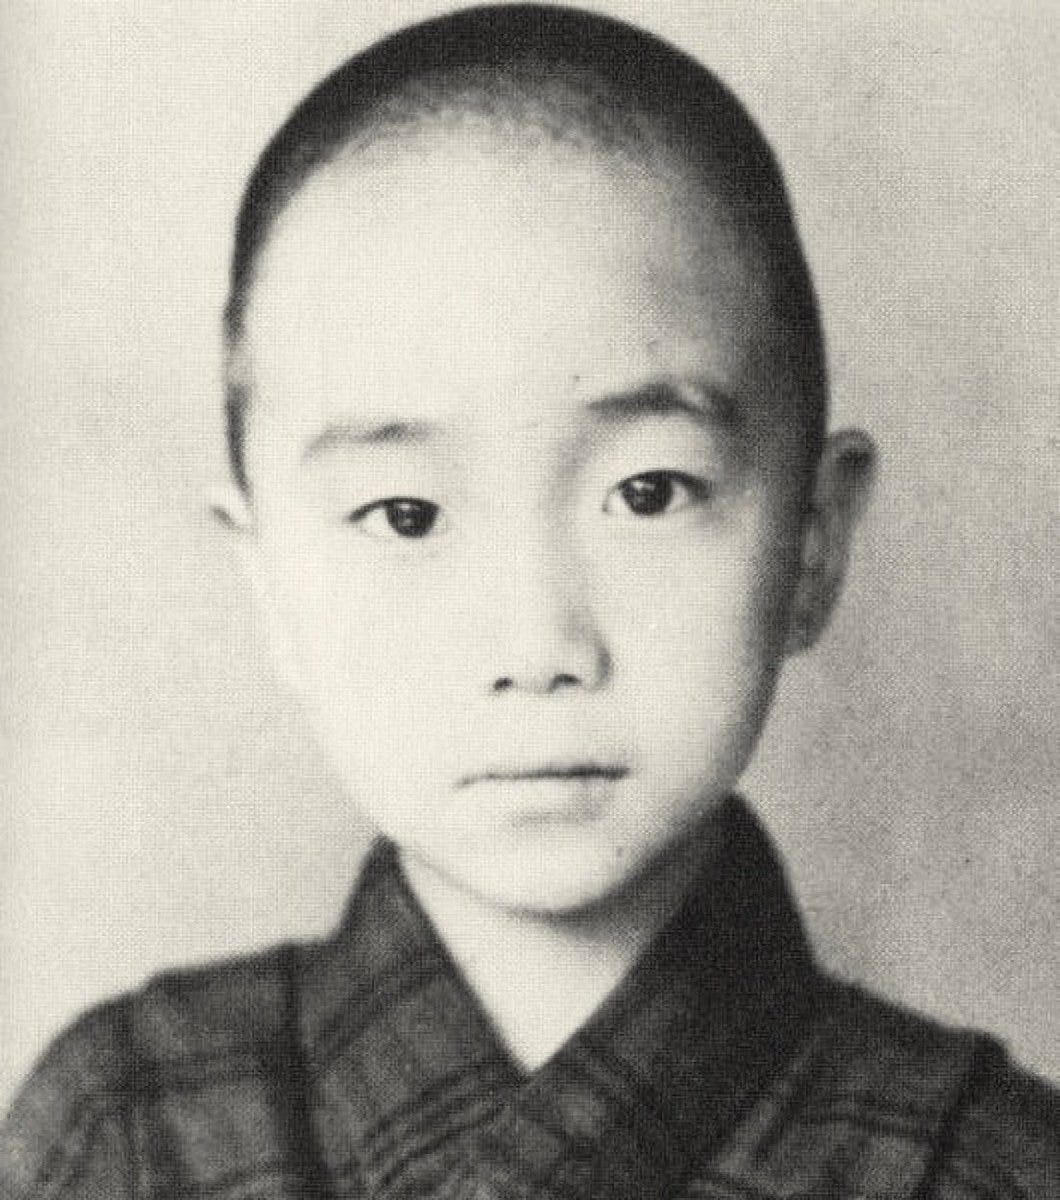 Steve Silberman on Twitter: &quot;Author Yukio Mishima as a child, Japan 1930s.  https://t.co/ccYip5U852&quot; / Twitter